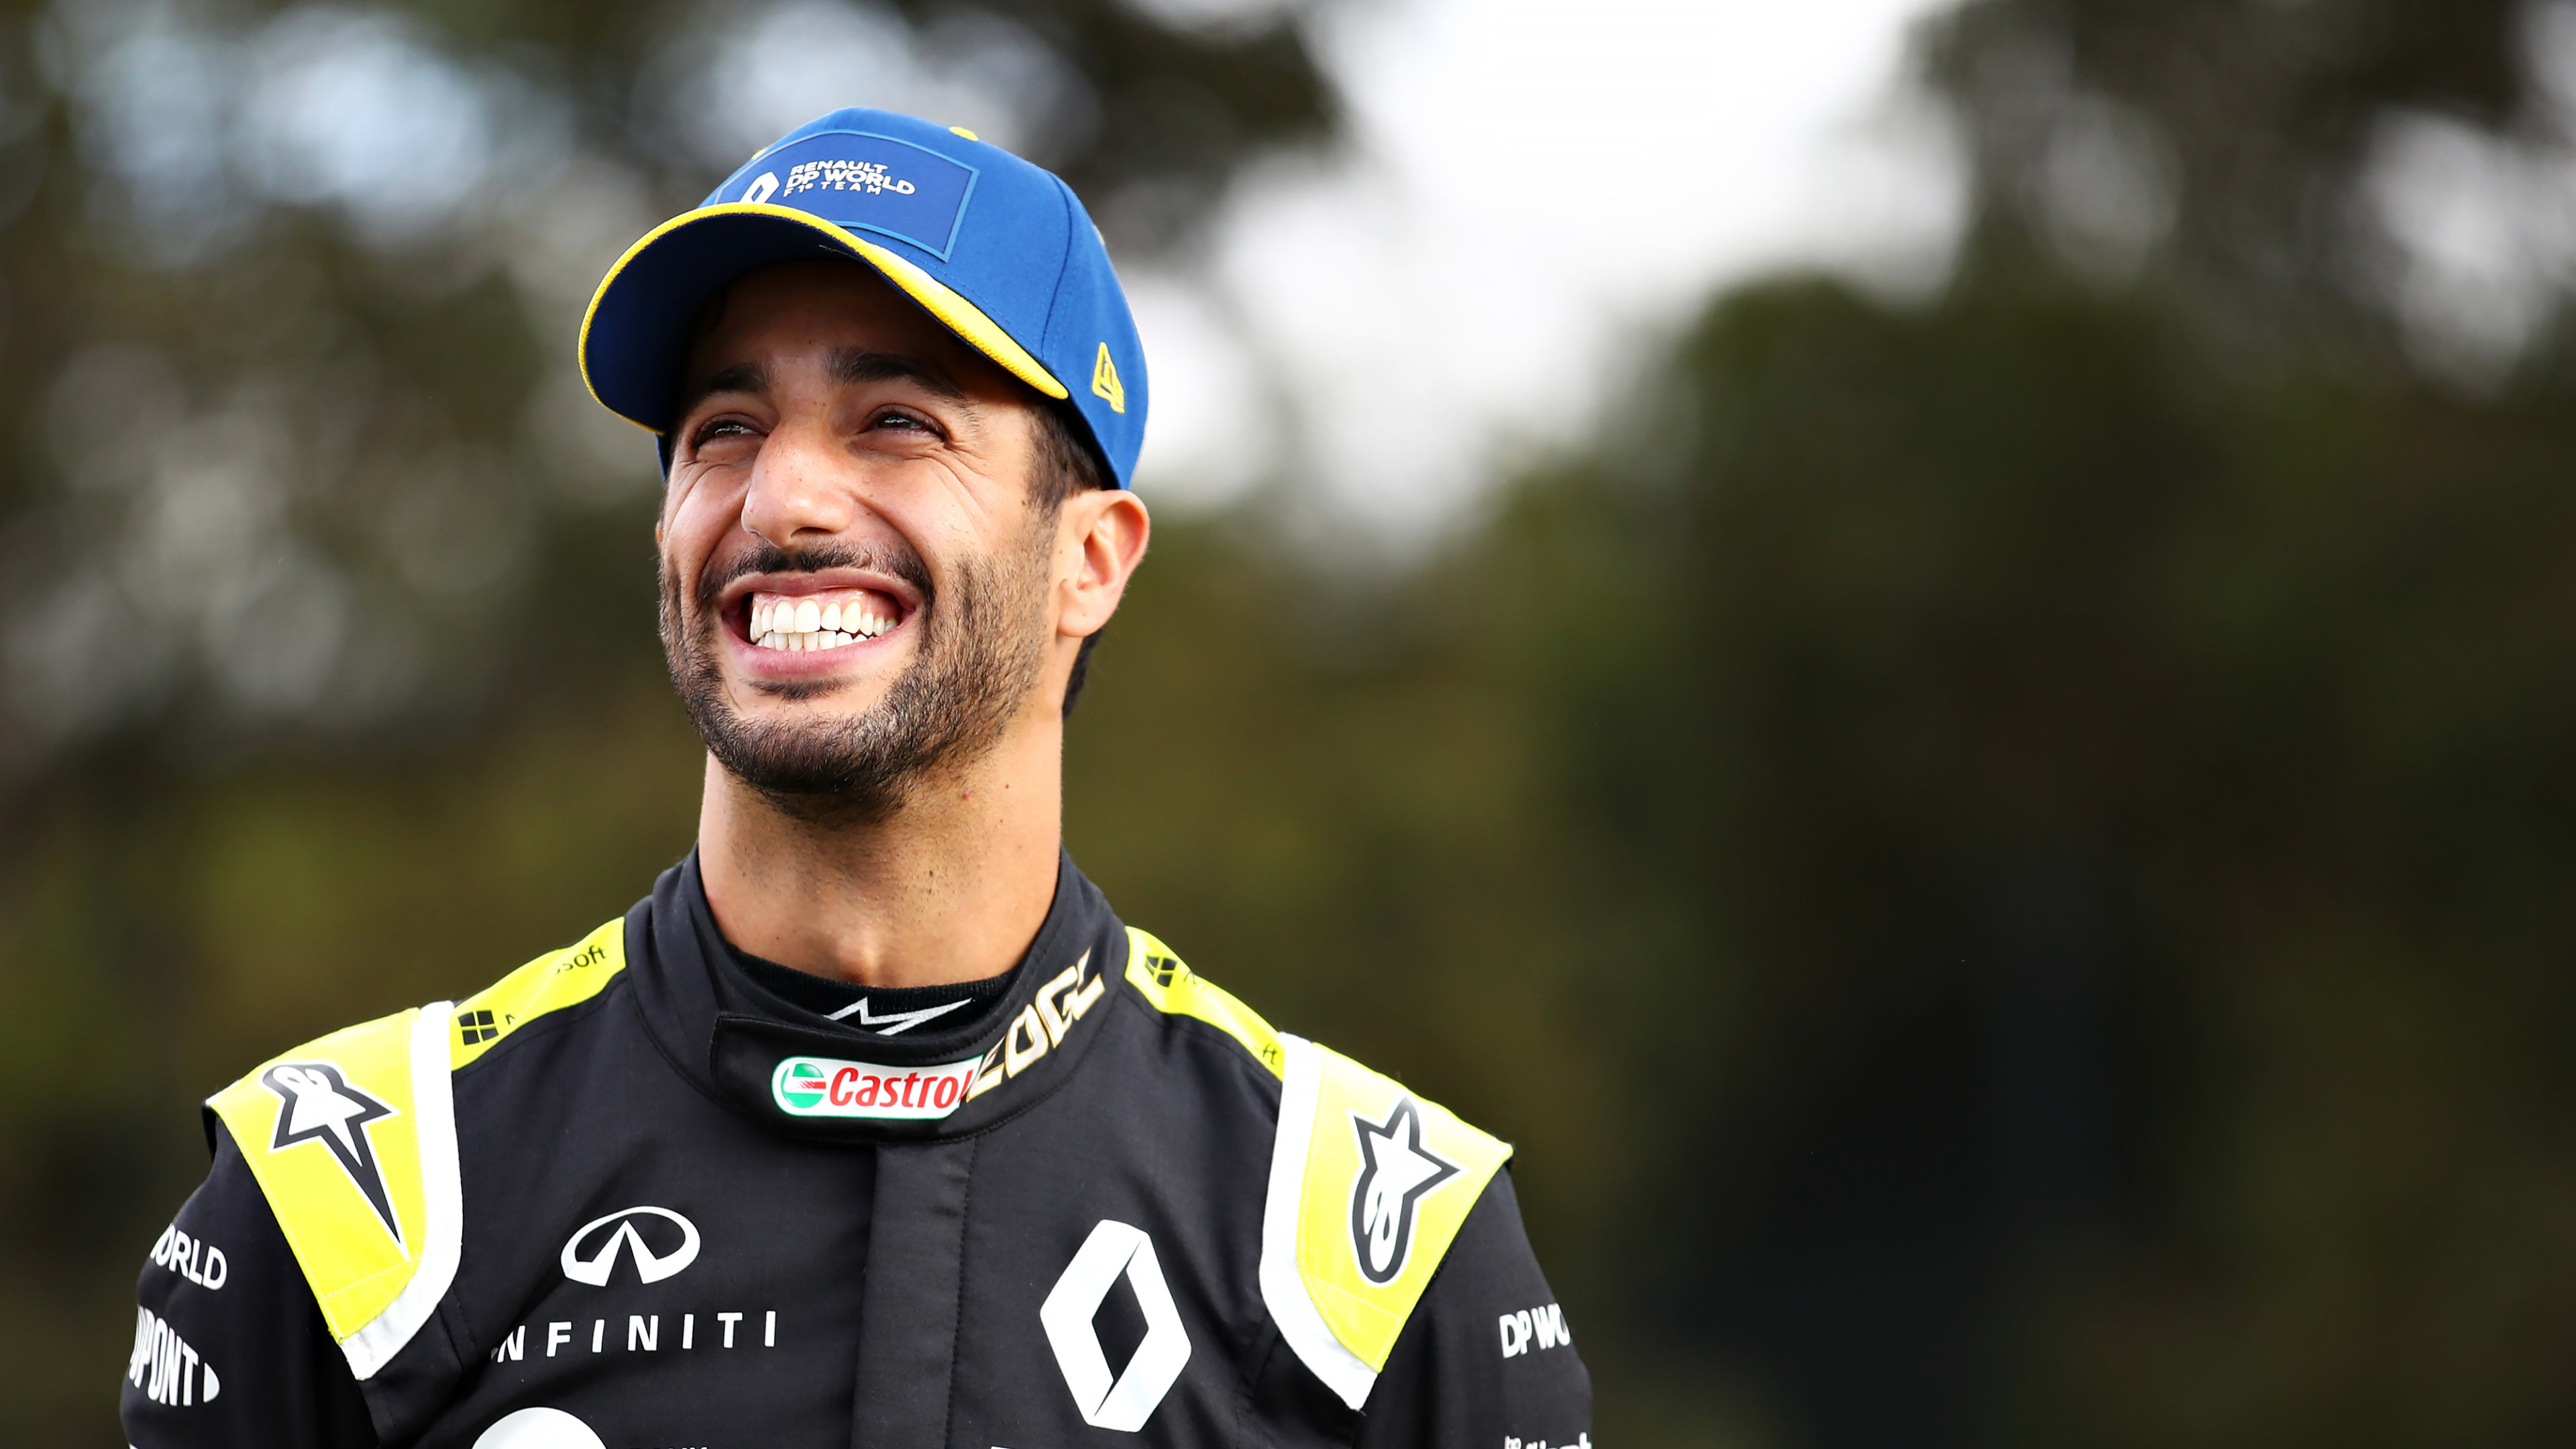 Daniel Ricciardo - F1 Driver for Renault